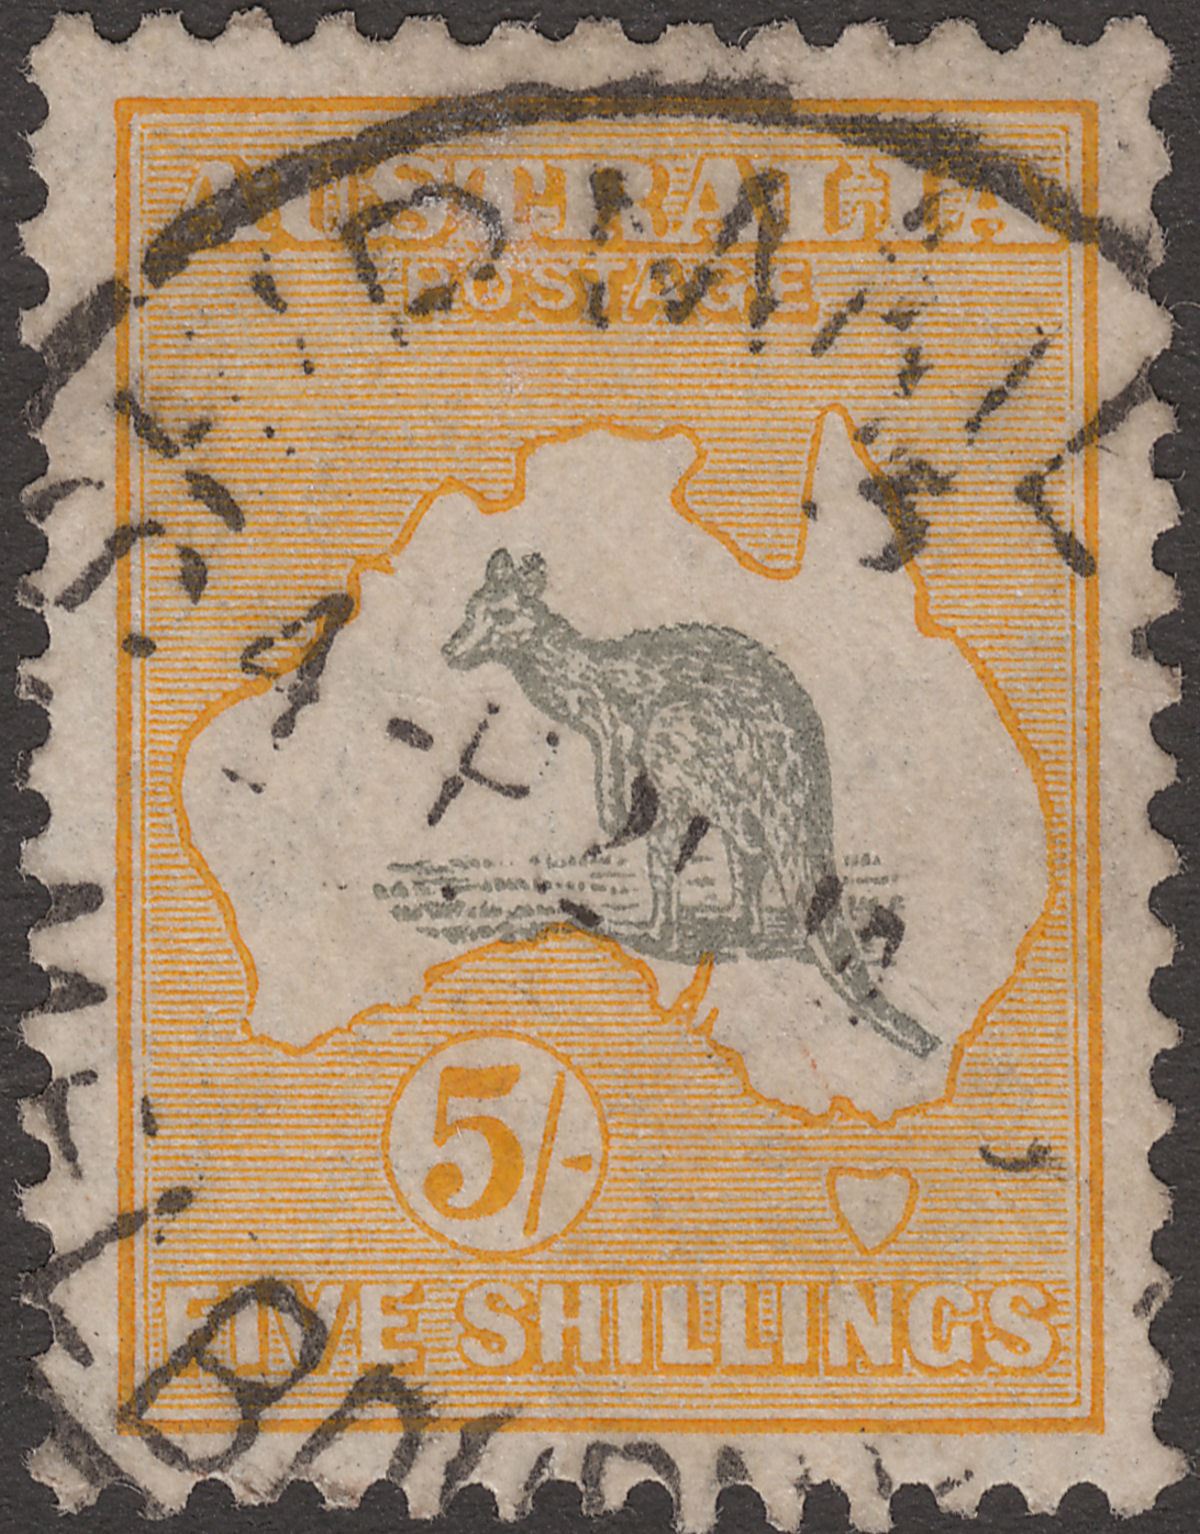 Australia 1932 KGV Roo 5sh Grey and Yellow wmk CofA Used SG135 cat £20